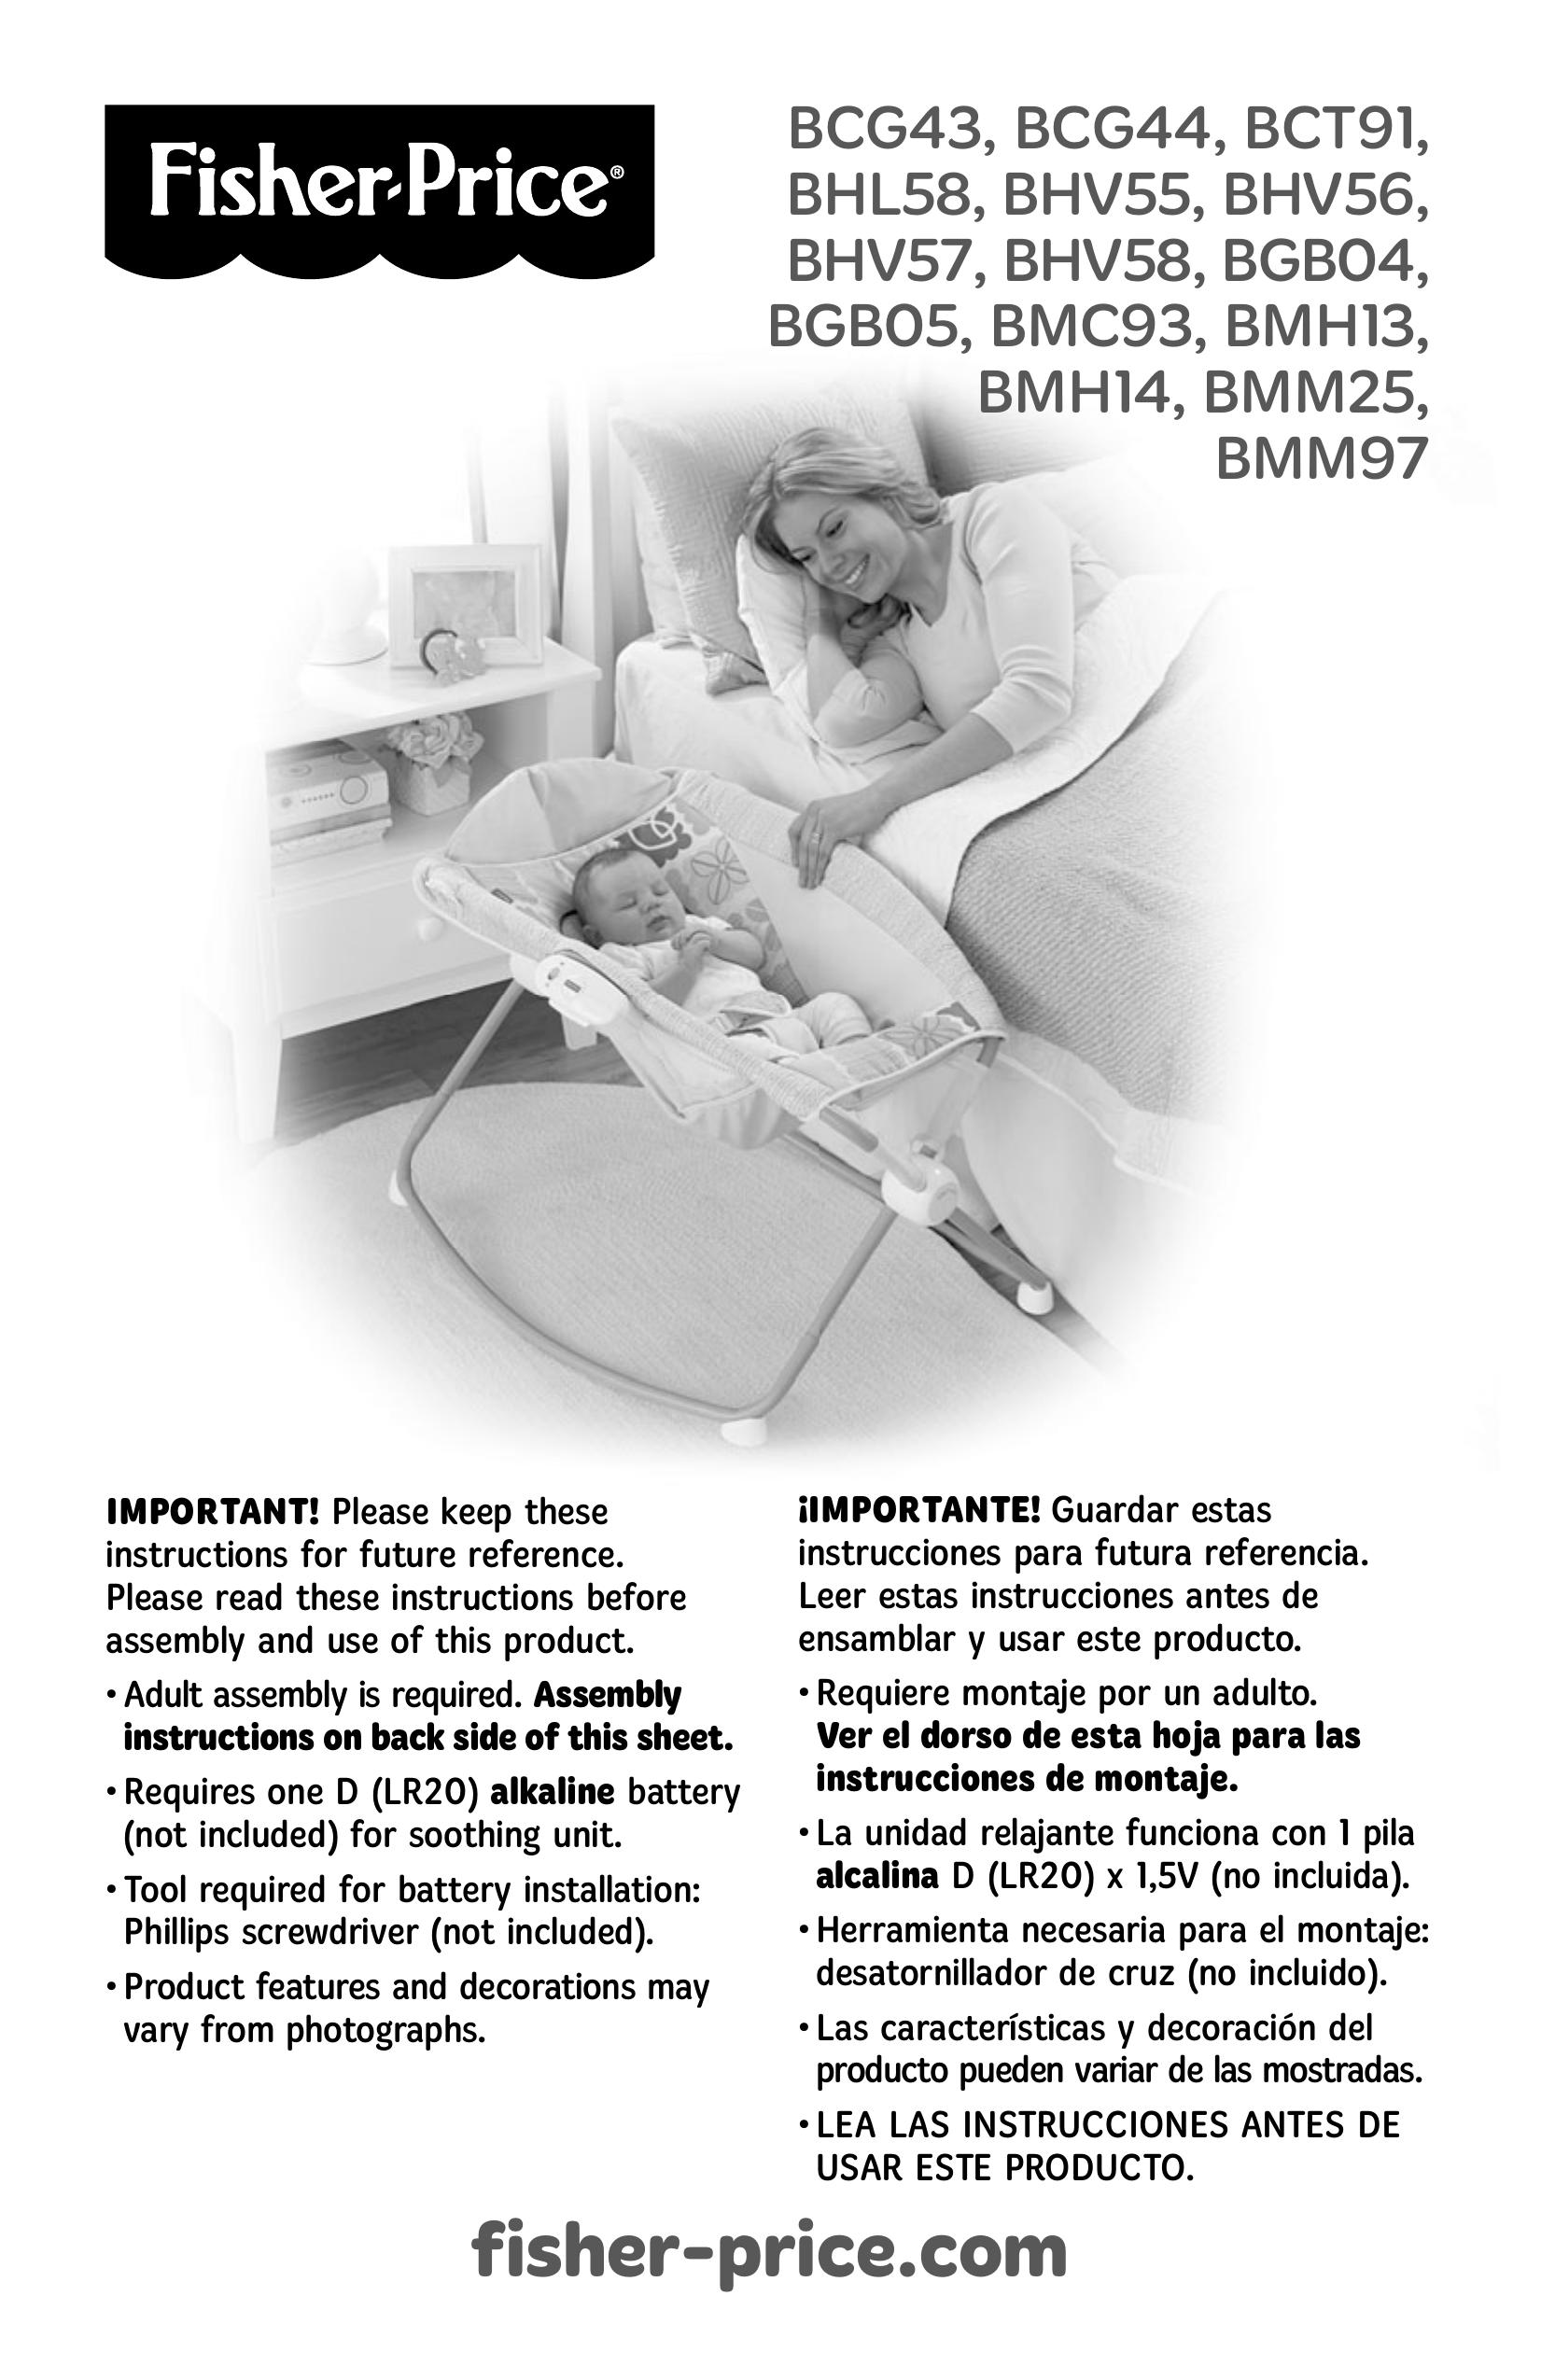 Fisher-Price BHV56 Sleep Apnea Machine User Manual